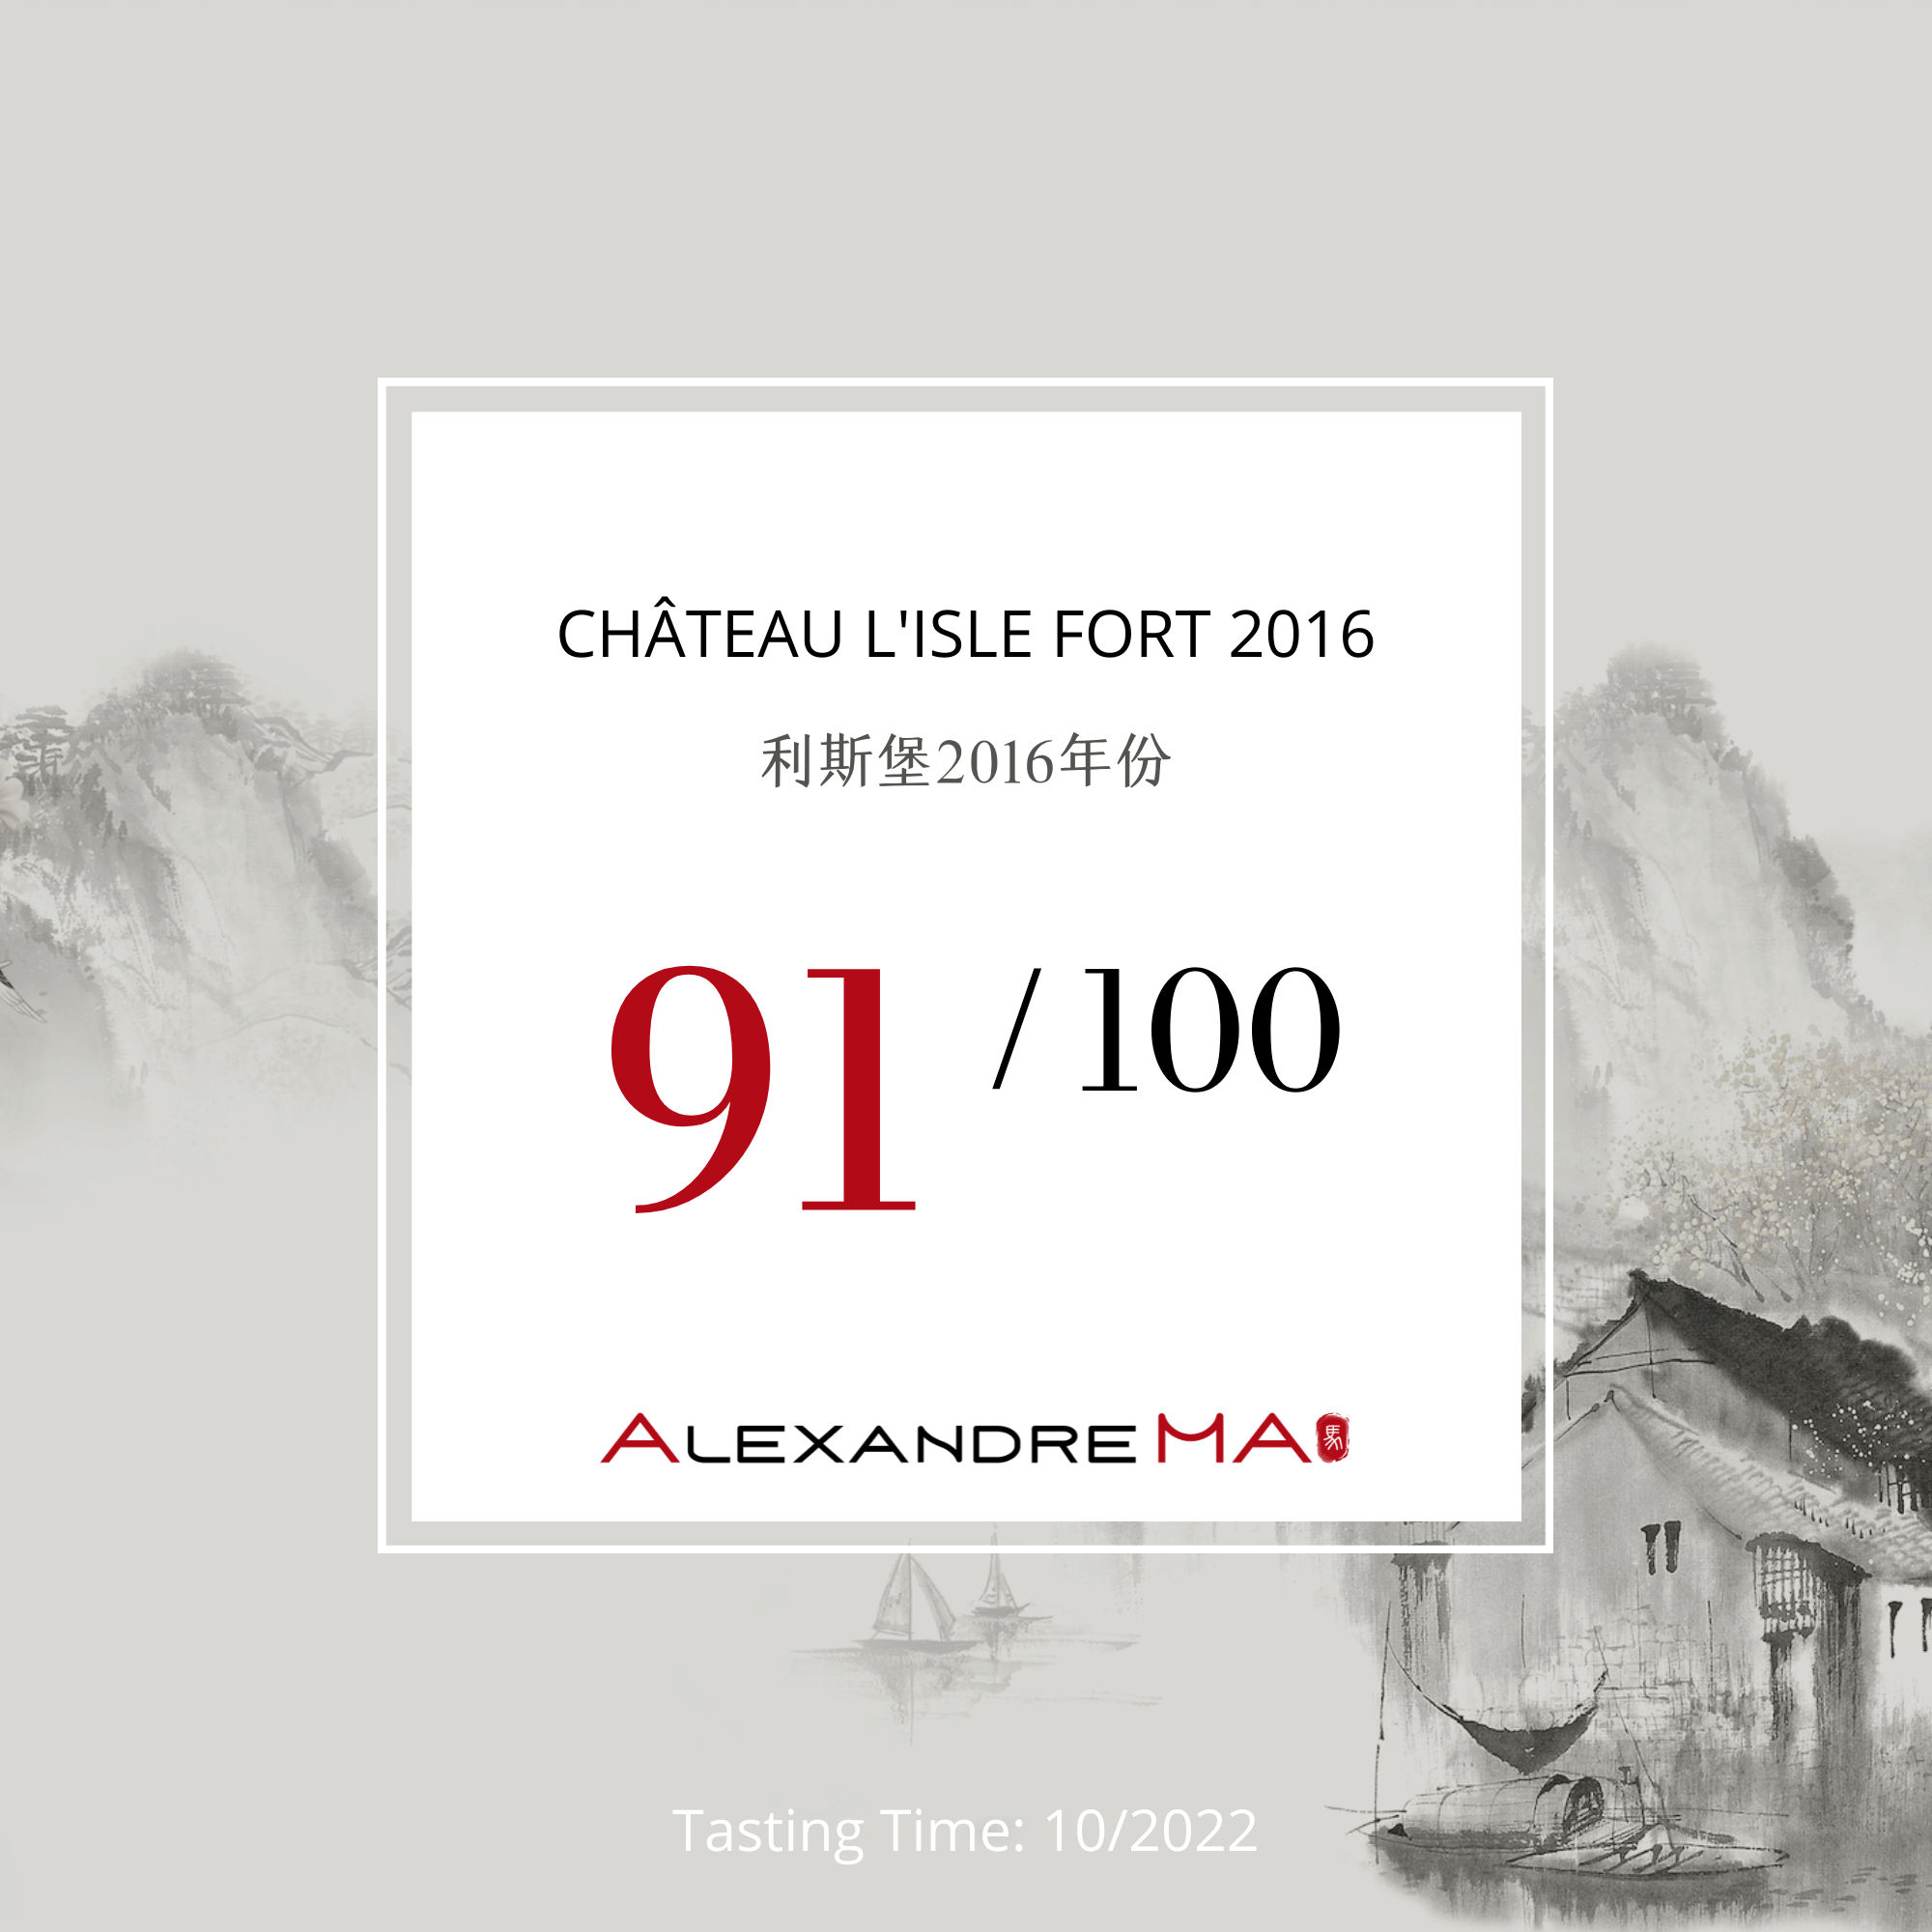 Château l’Isle Fort 2016 - Alexandre MA